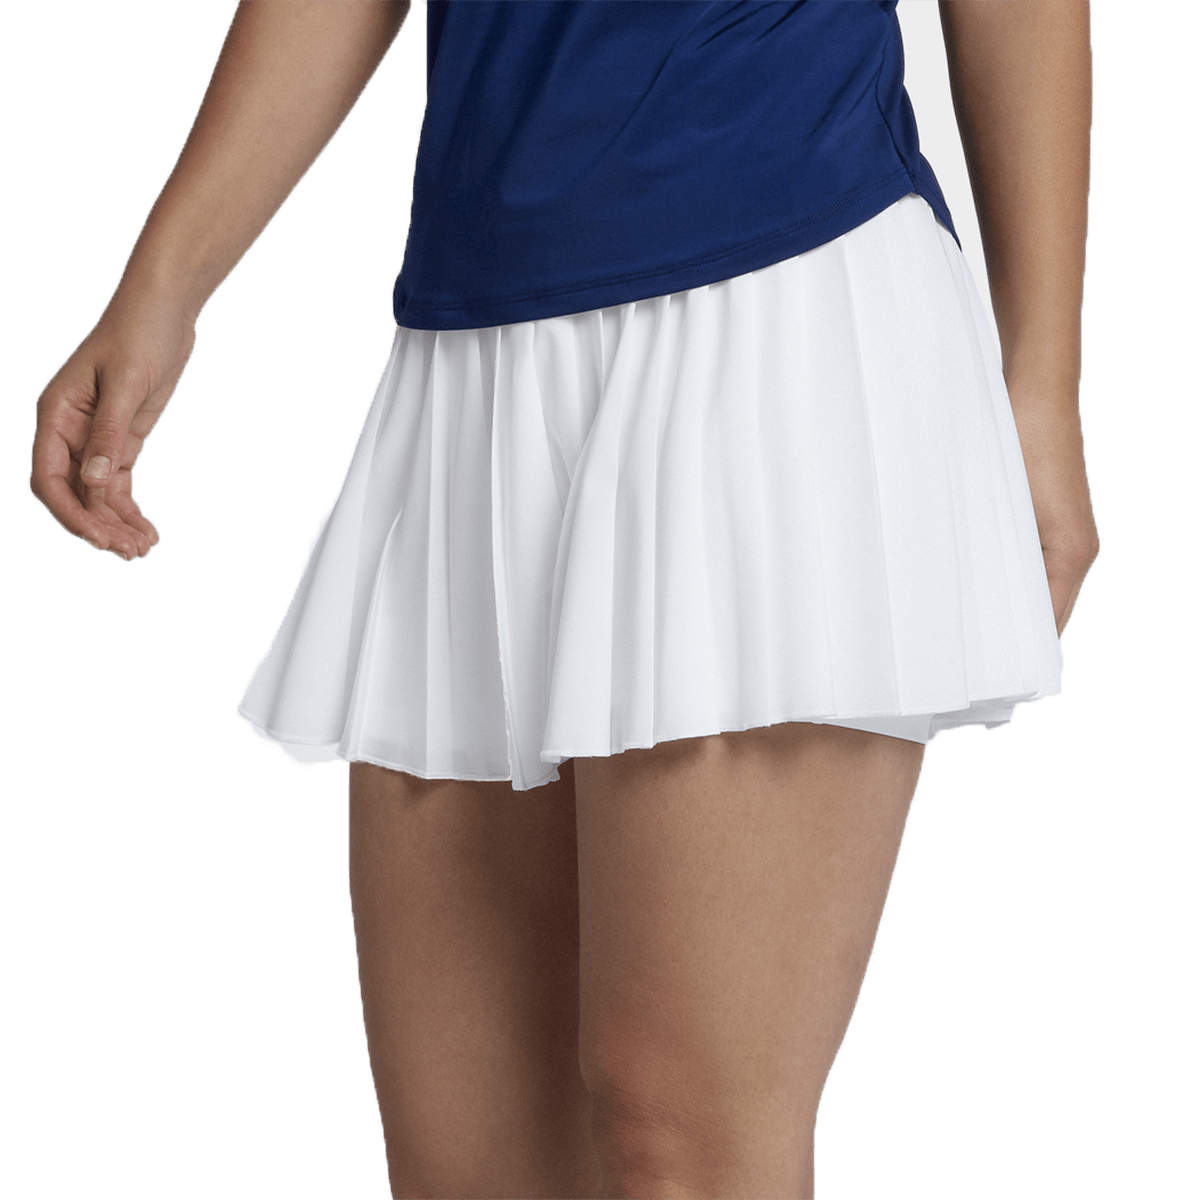 nike victory tennis skirt canada